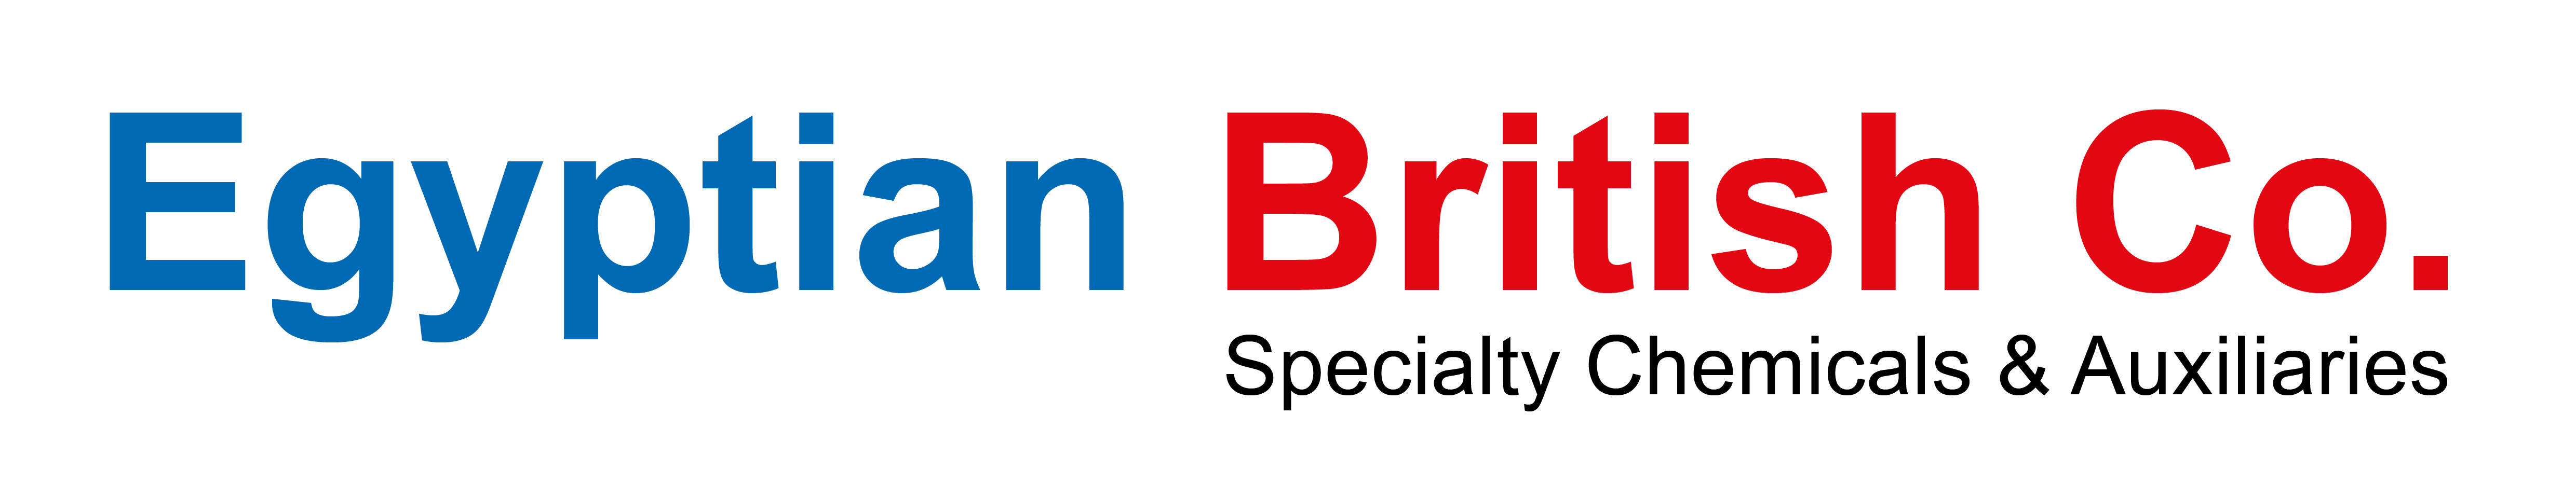 Egyptian British Co._logo